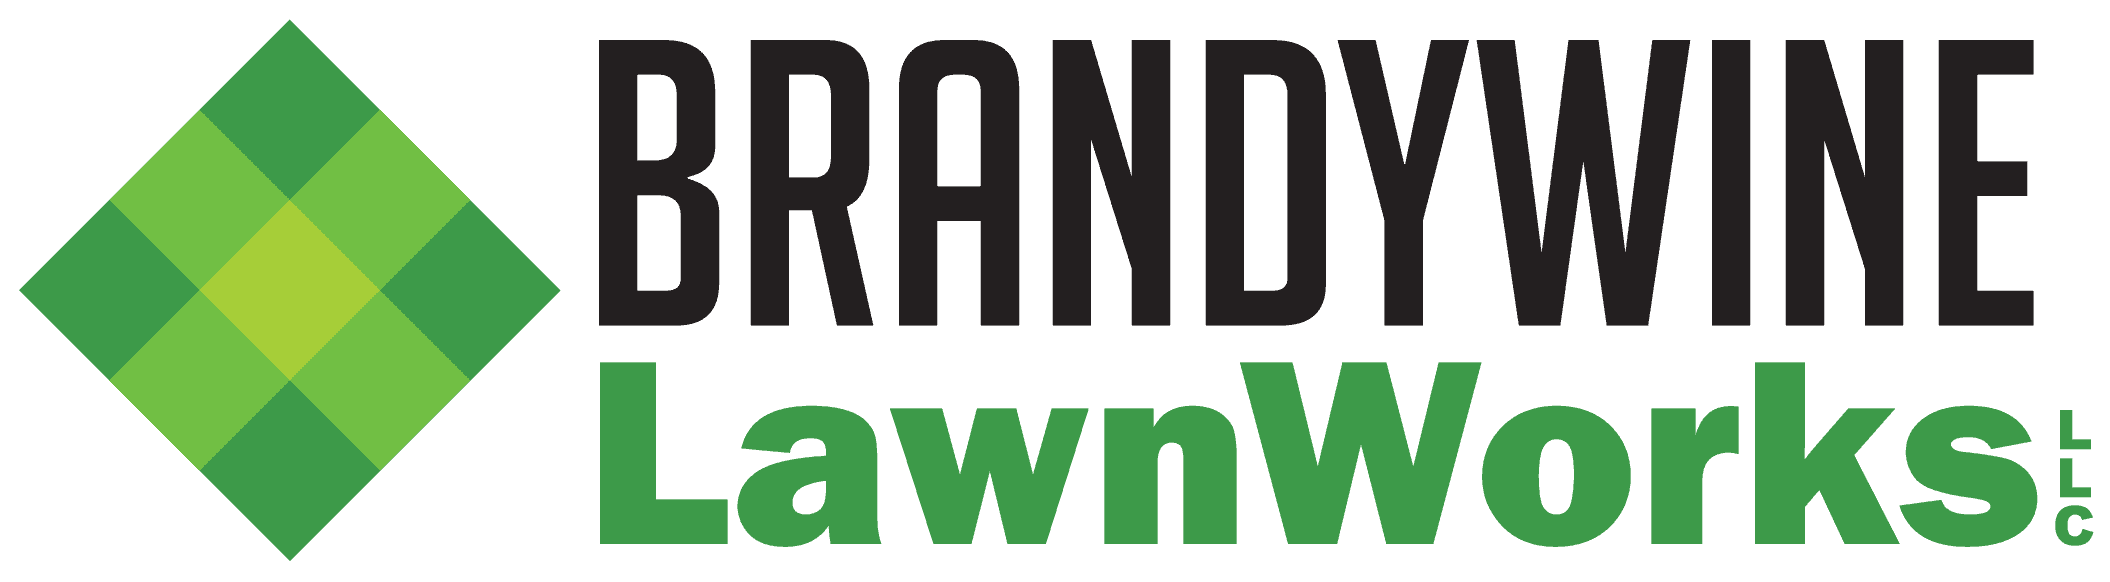 Brandywine LawnWorks LLC's logo